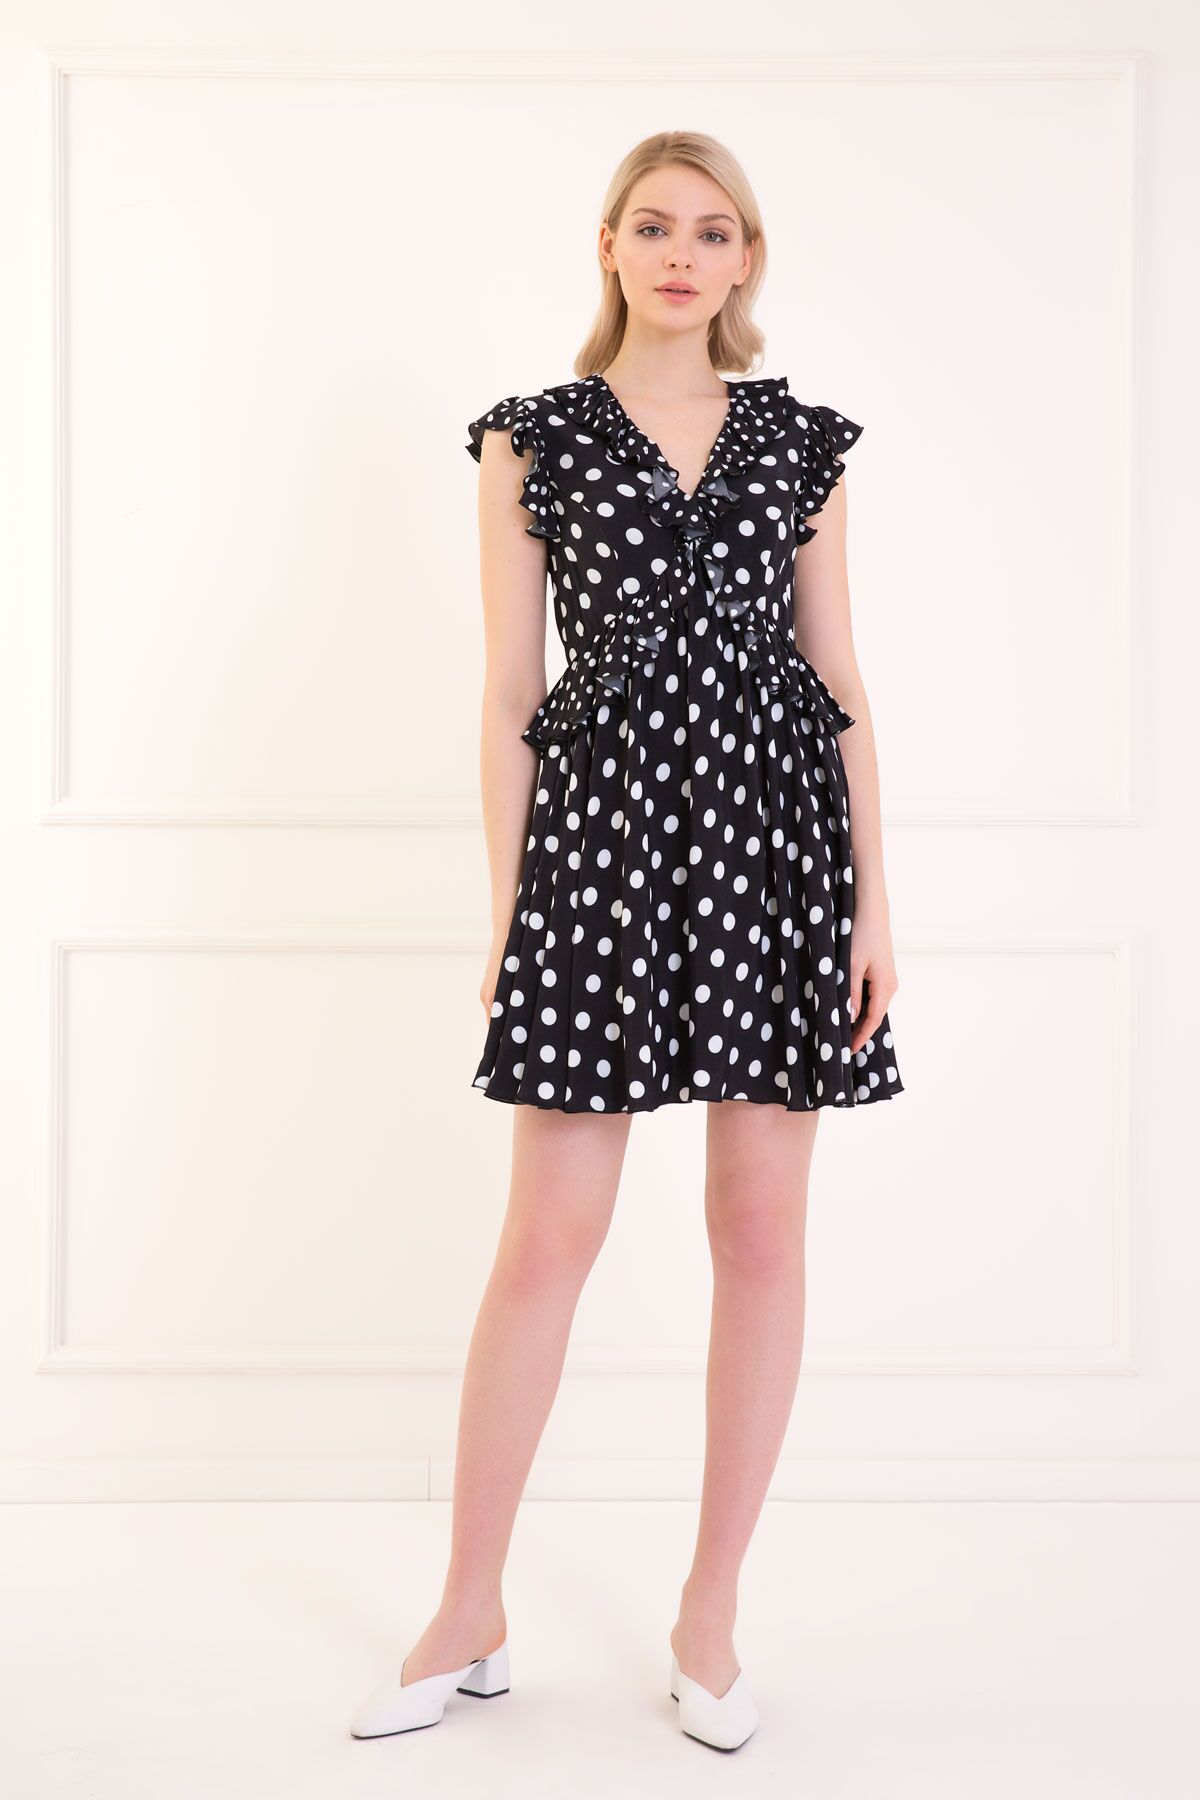 KIWE - Ruffle And Flywheel Detail Polka Dot Black Short Dress